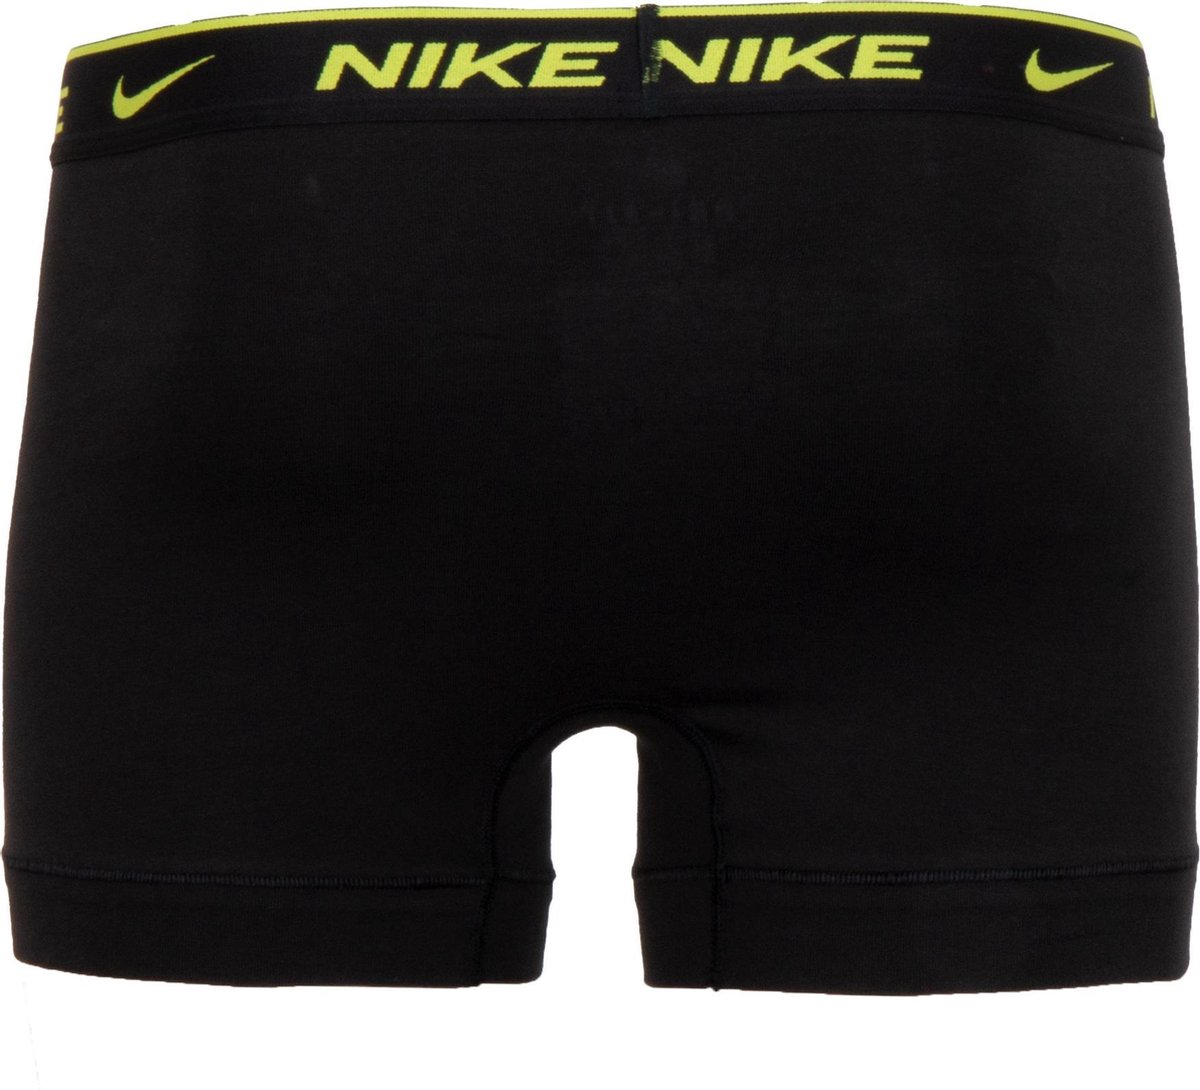 Nike Onderbroek - Mannen - zwart/grijs/geel | bol.com